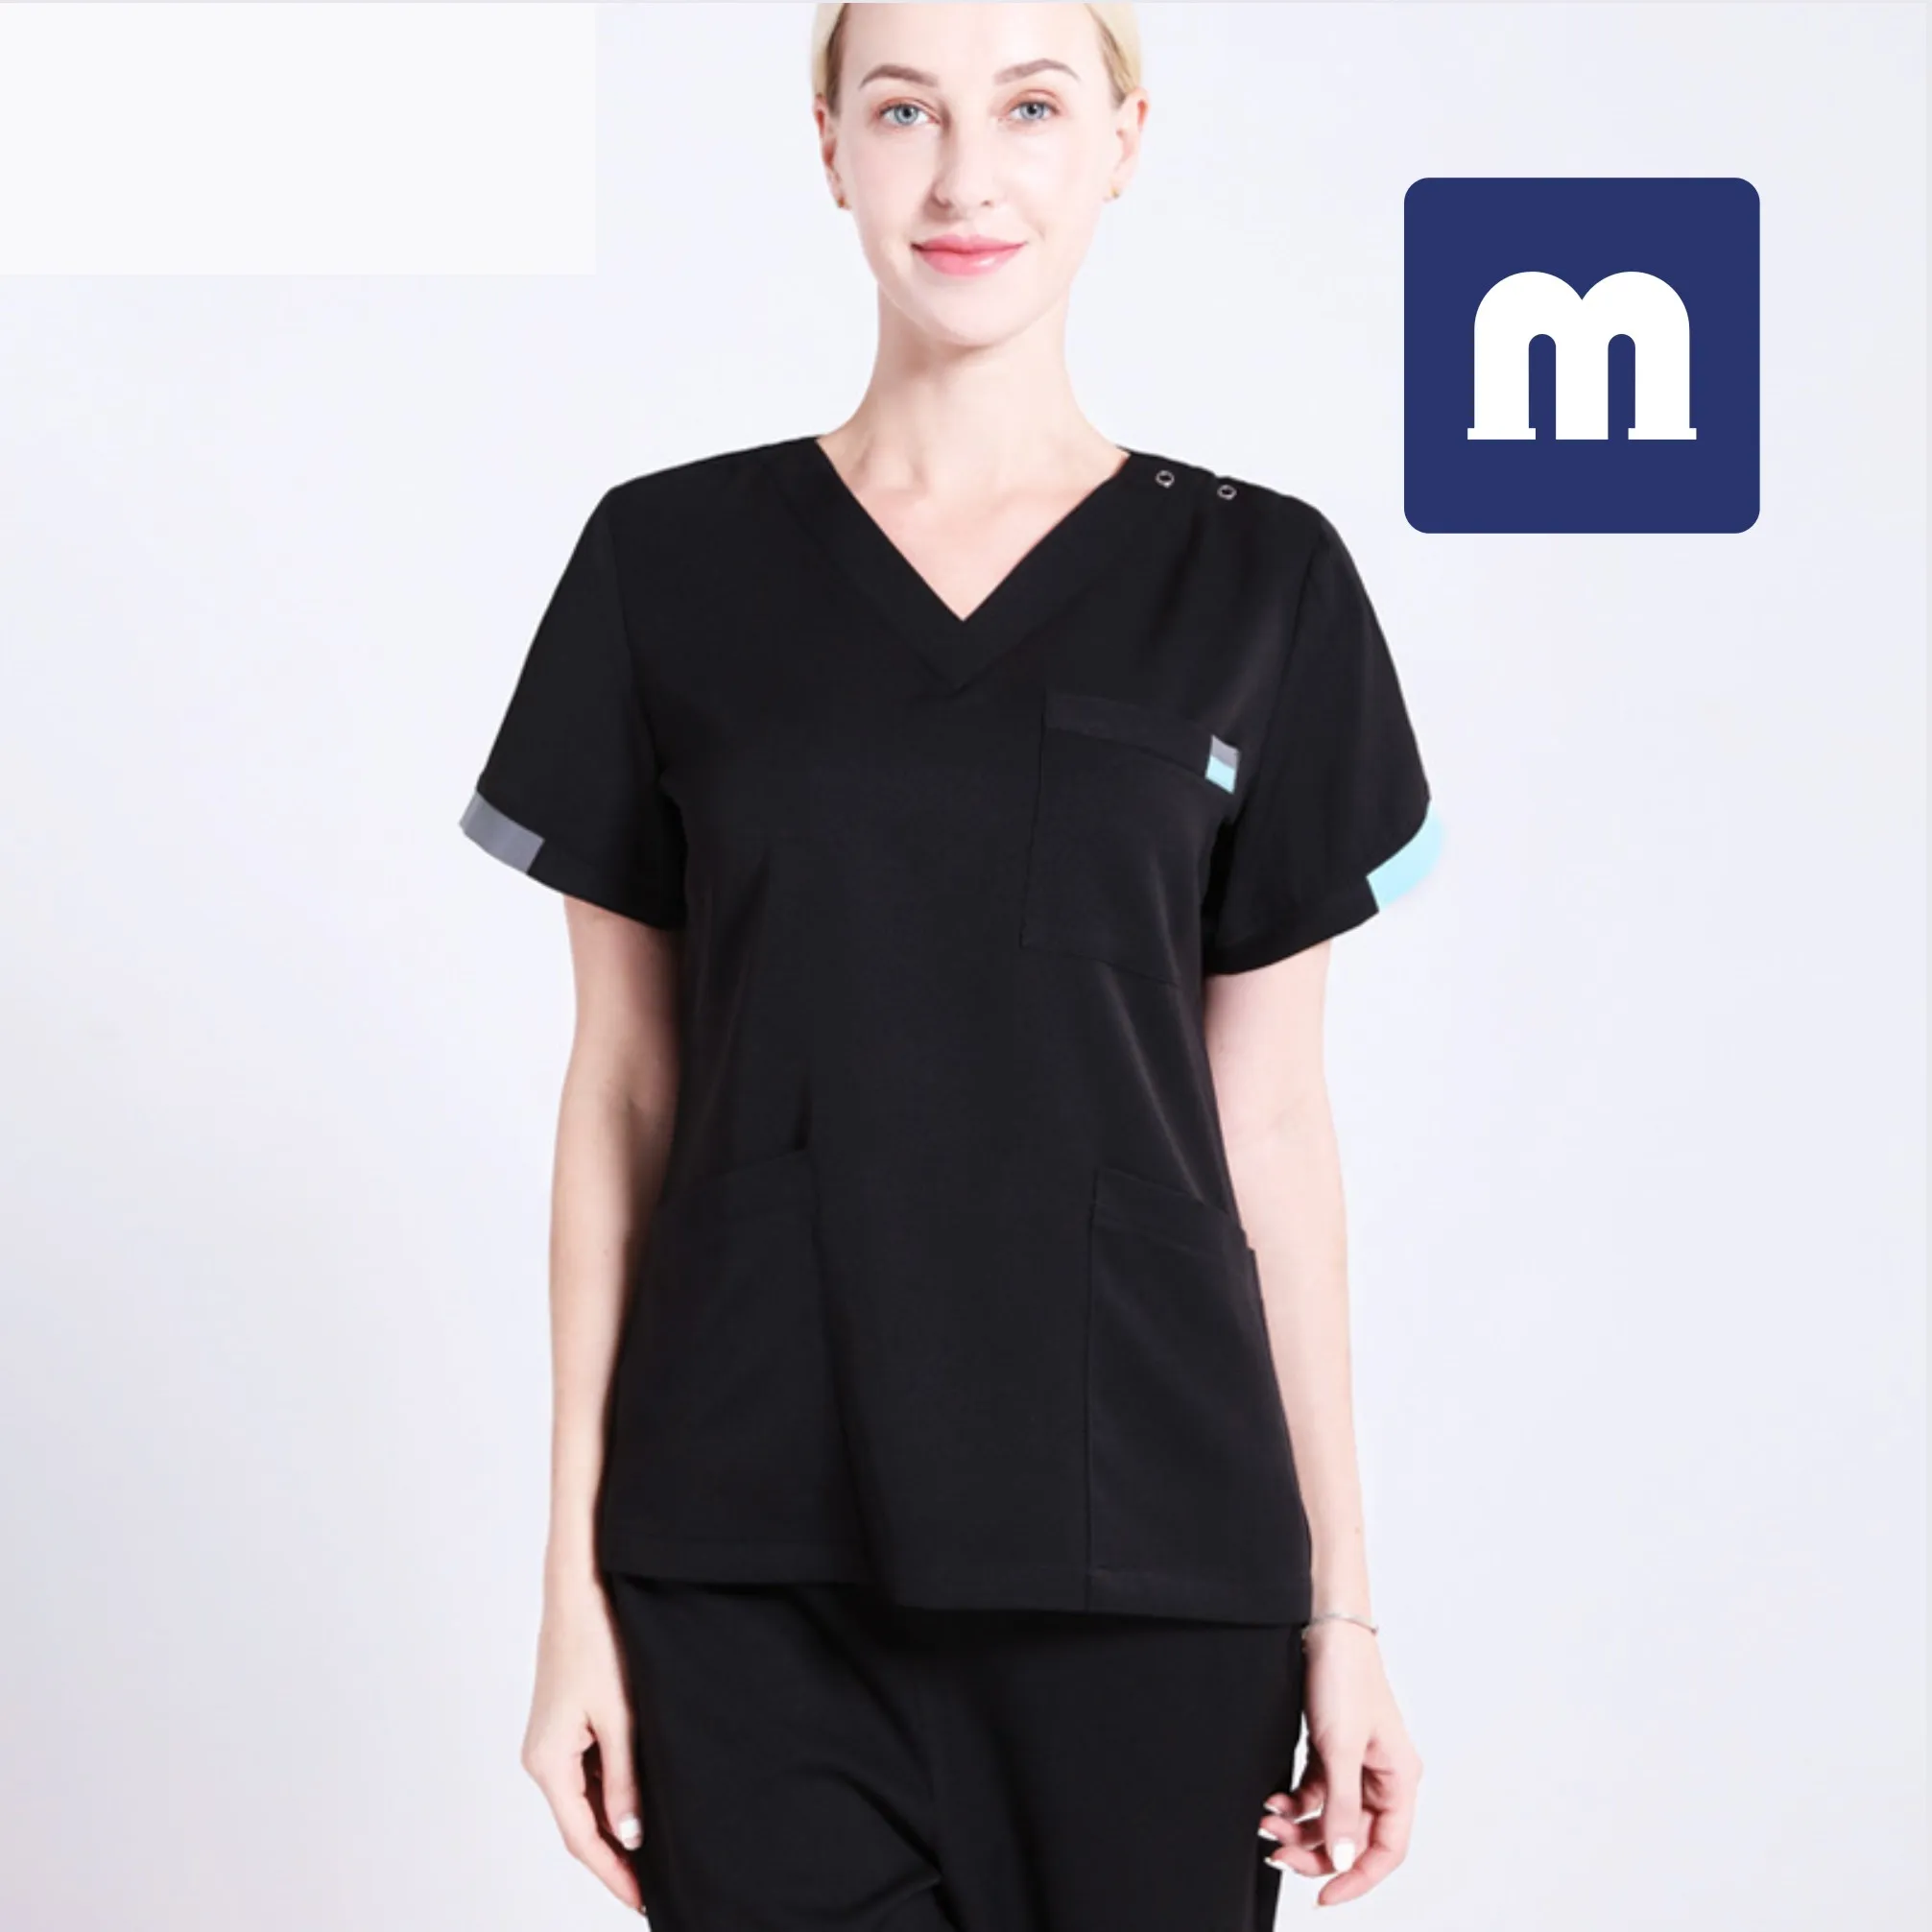 Medigo-077女性2個のズボン女性のスクラブトップス+パンツ男性病院ユニフォーム手術スクラブシャツ半袖看護師ユニフォームペットグレイの解剖学医師のワークウェア